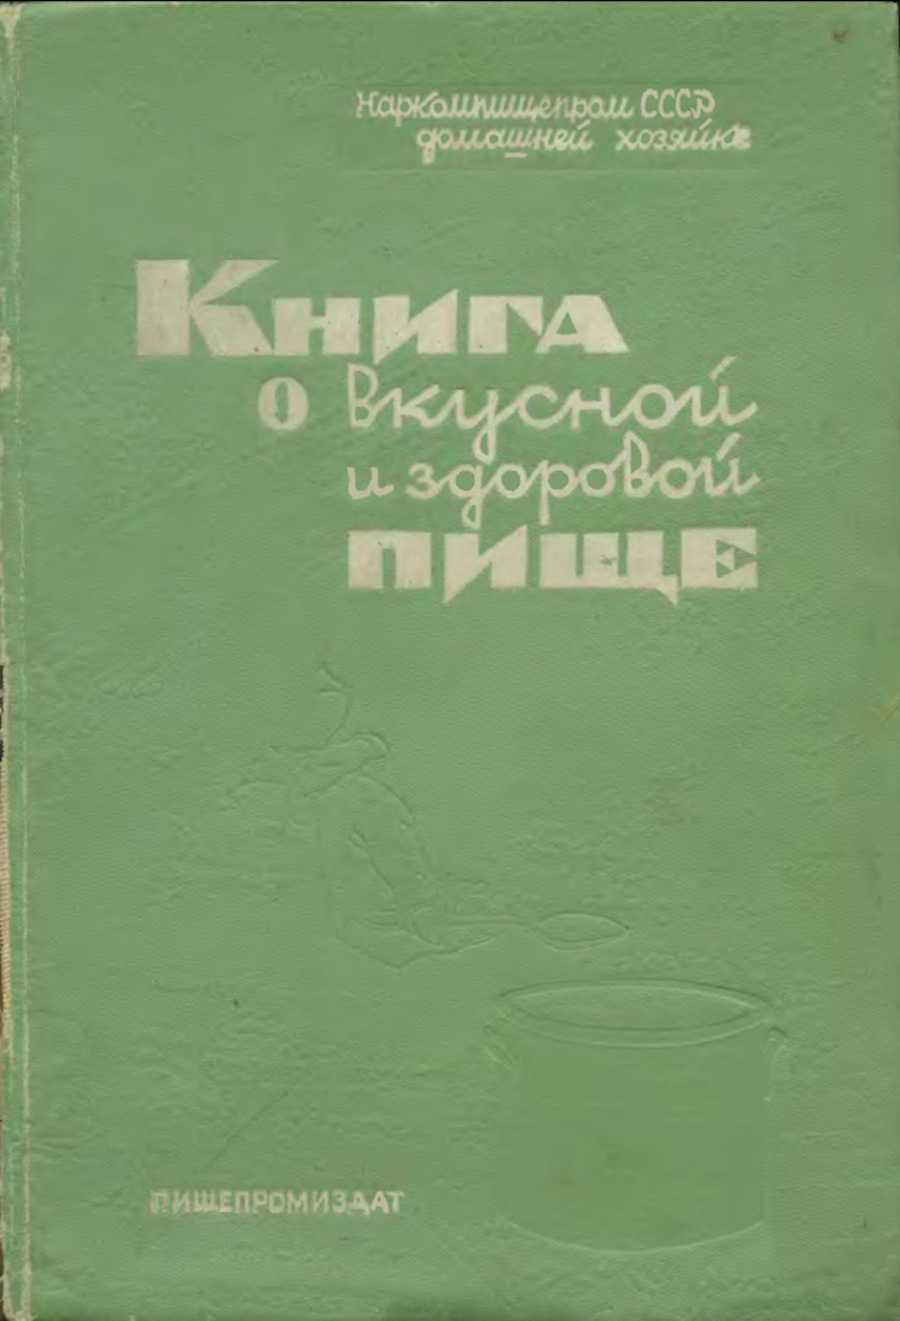 soviet-cookbook